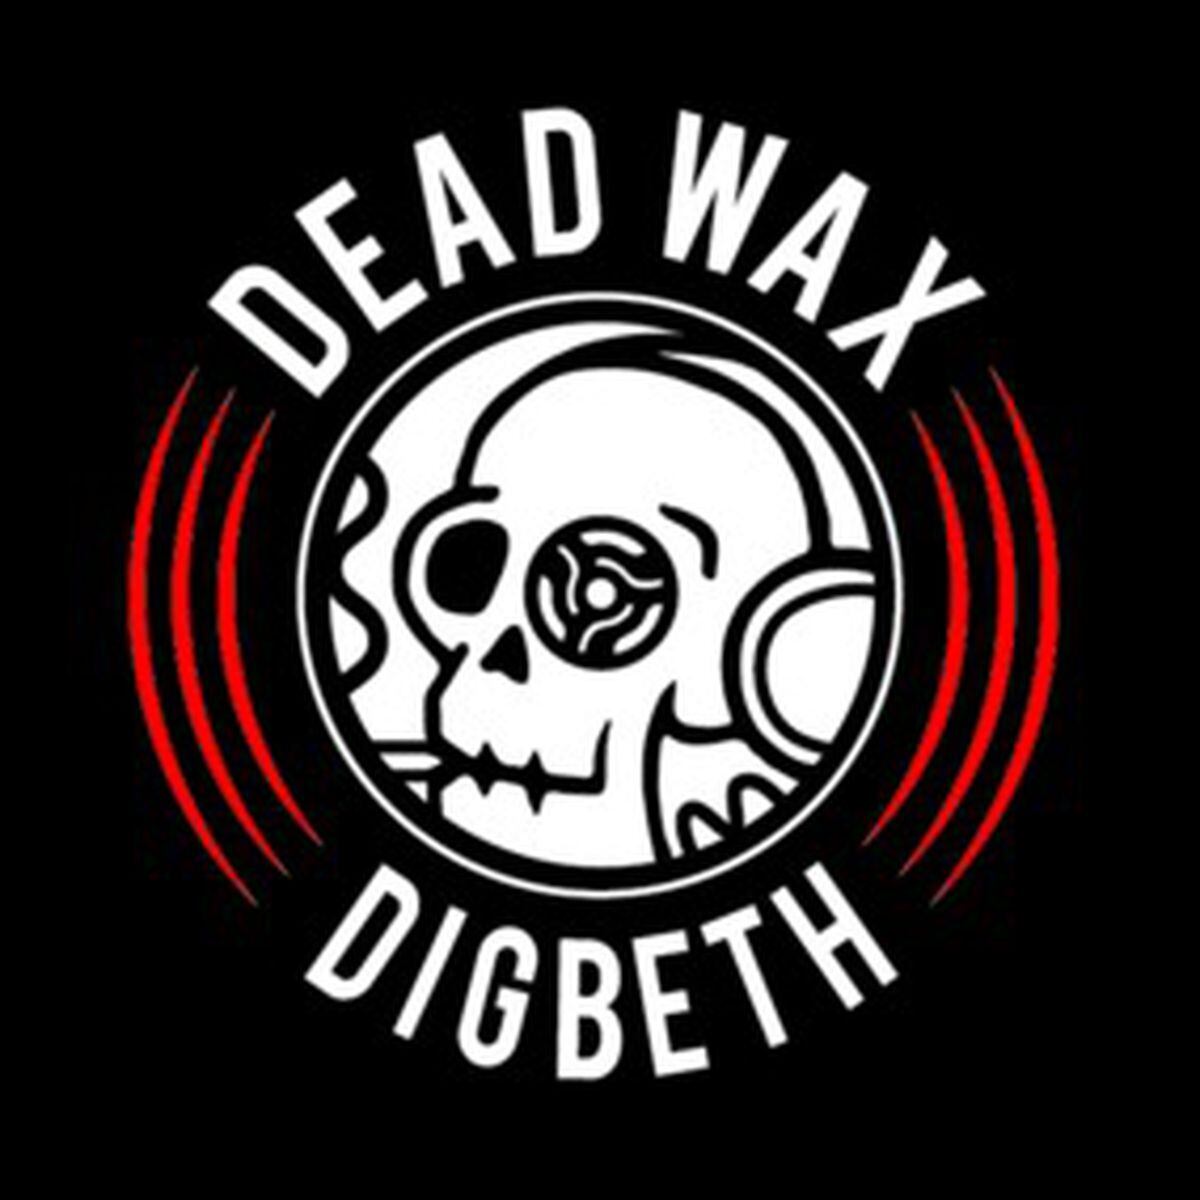 Dead Wax Digbeth Opens In Birmingham Tonight Express And Star